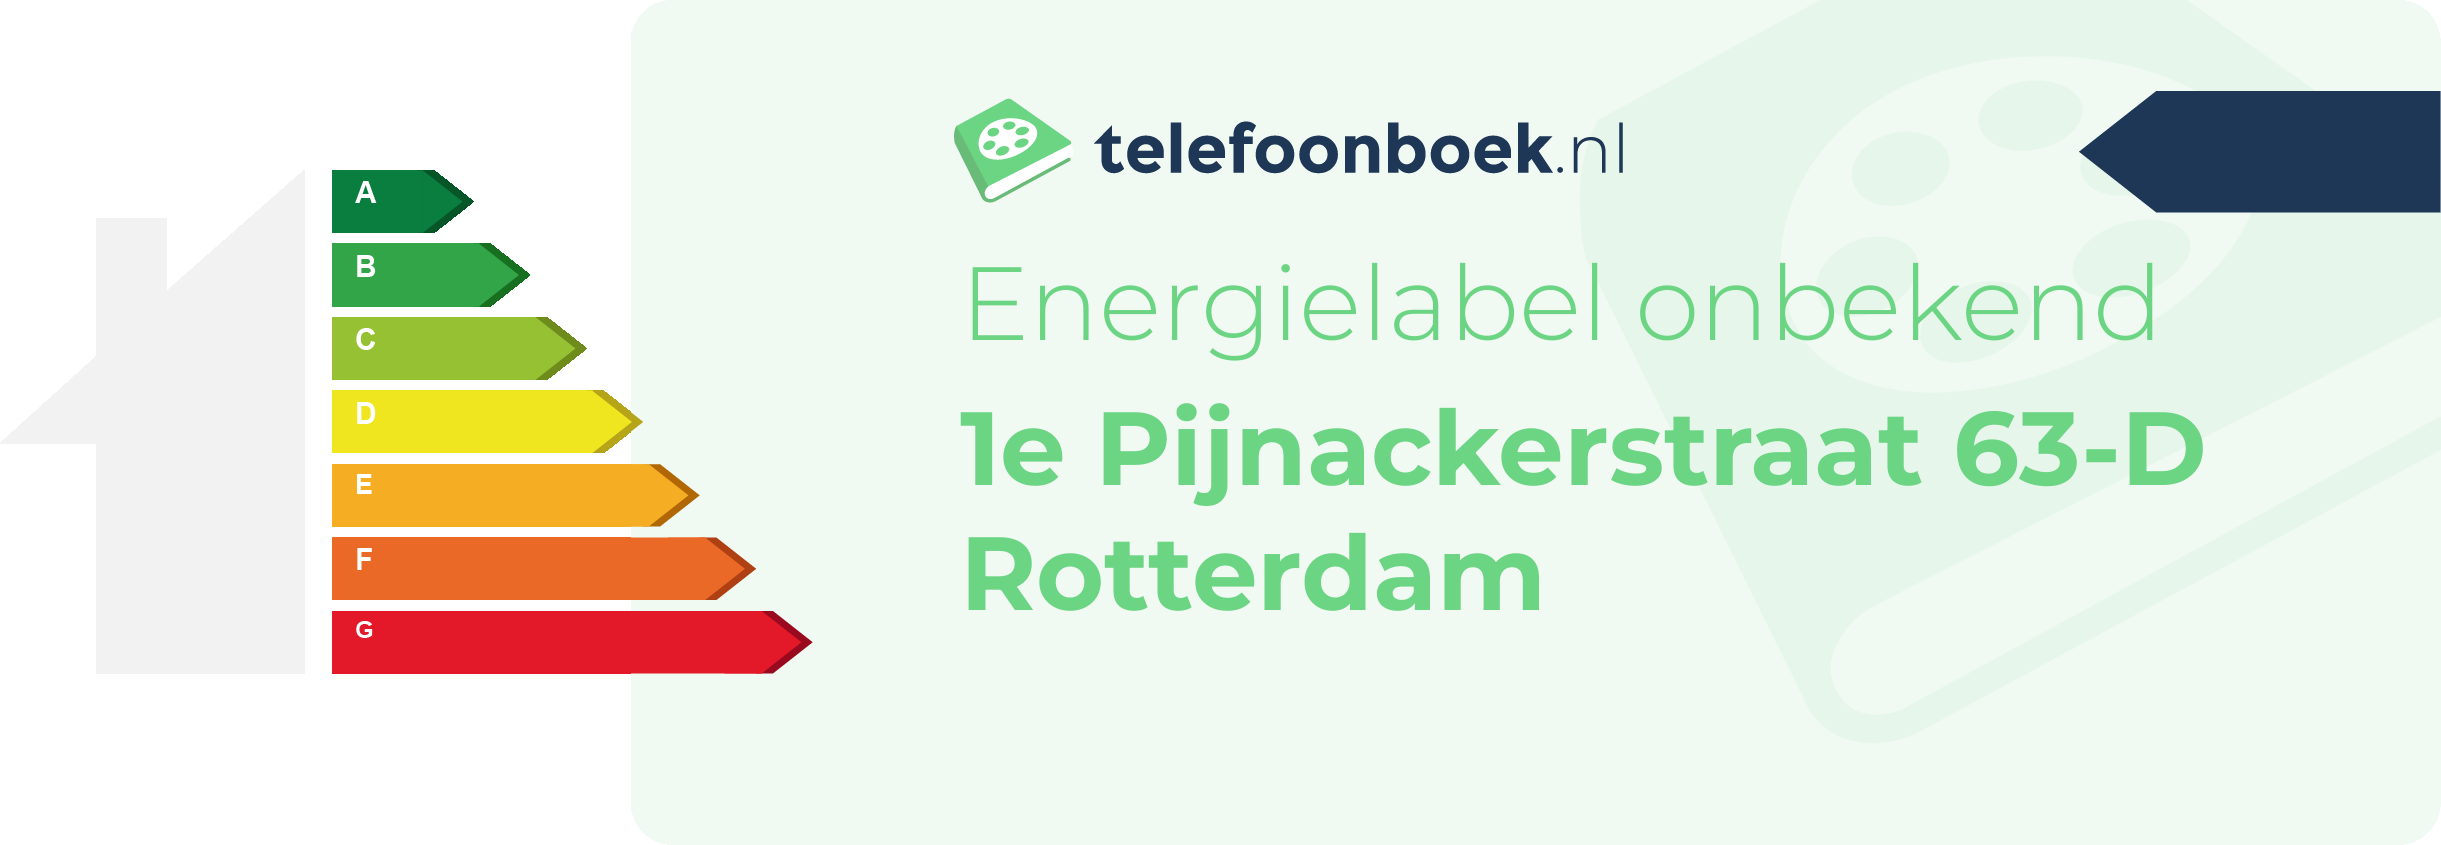 Energielabel 1e Pijnackerstraat 63-D Rotterdam